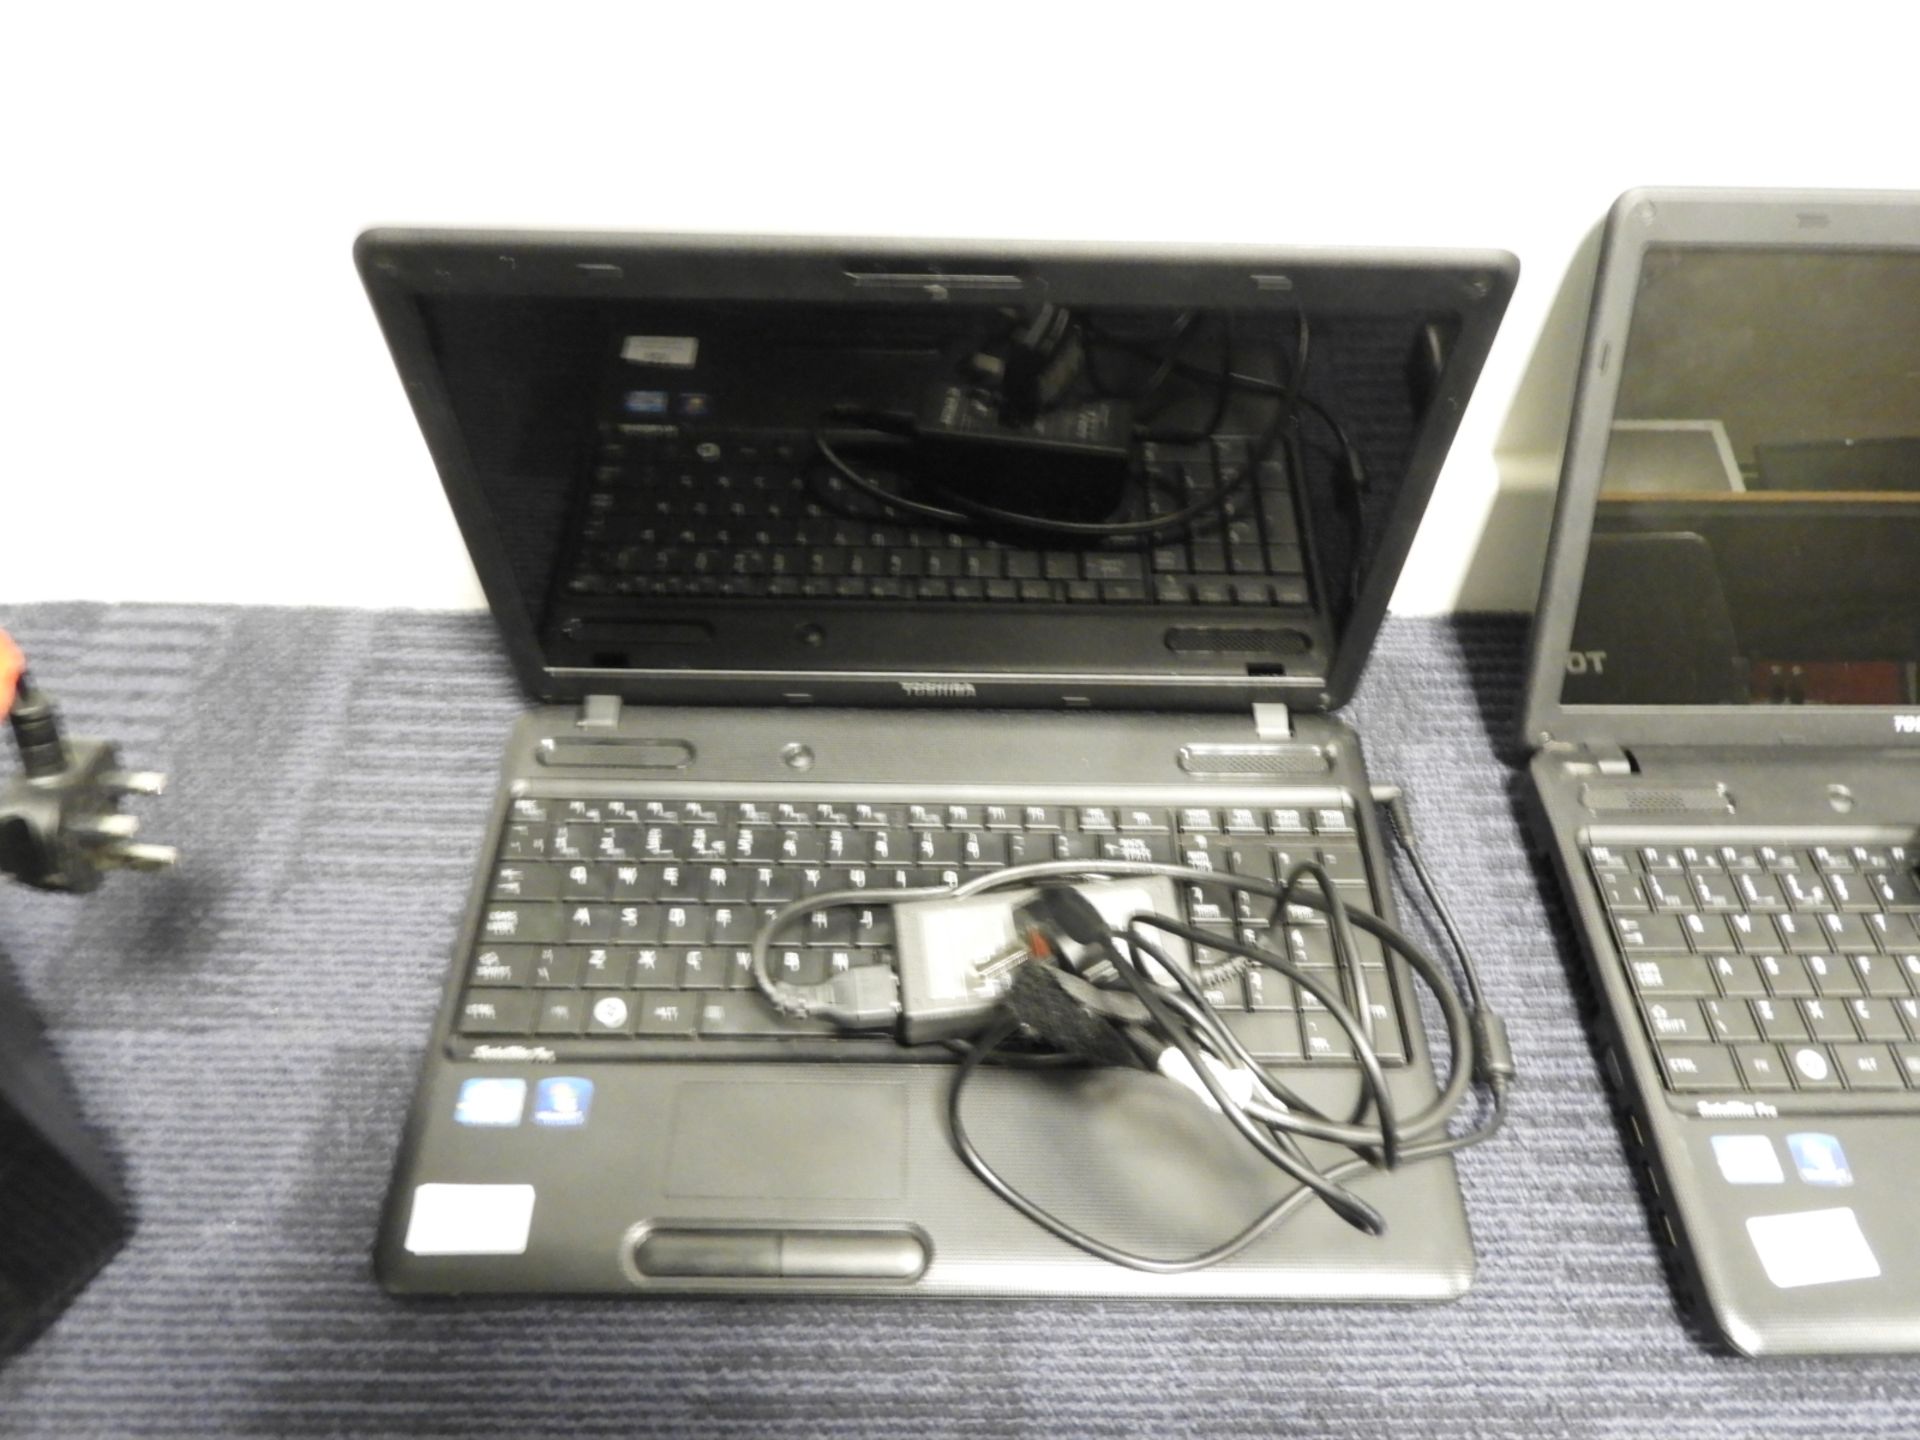 *Toshiba Satellite Pro C660 Laptop Computer